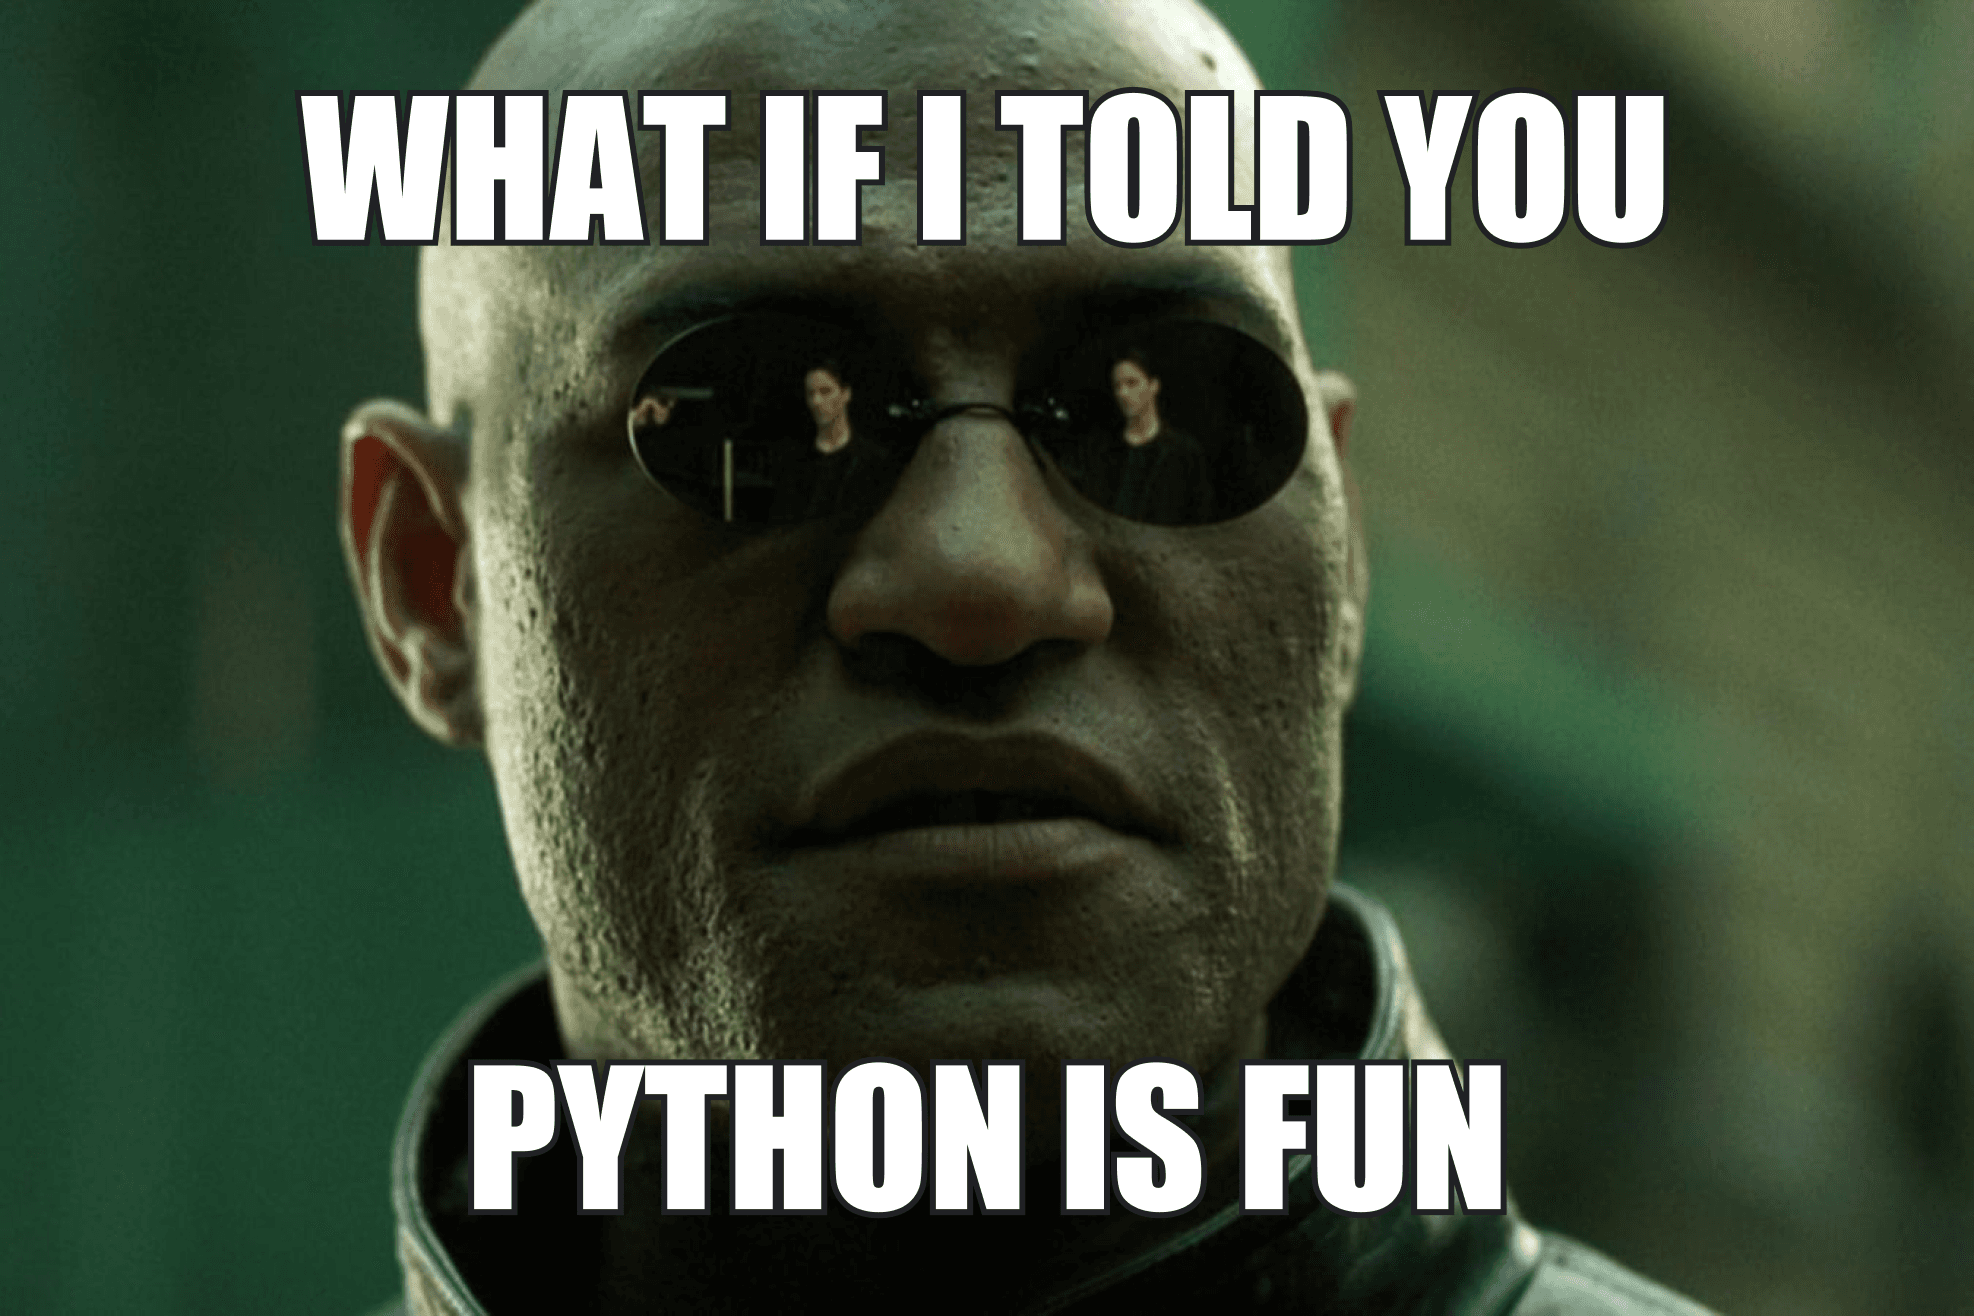 Python is fun